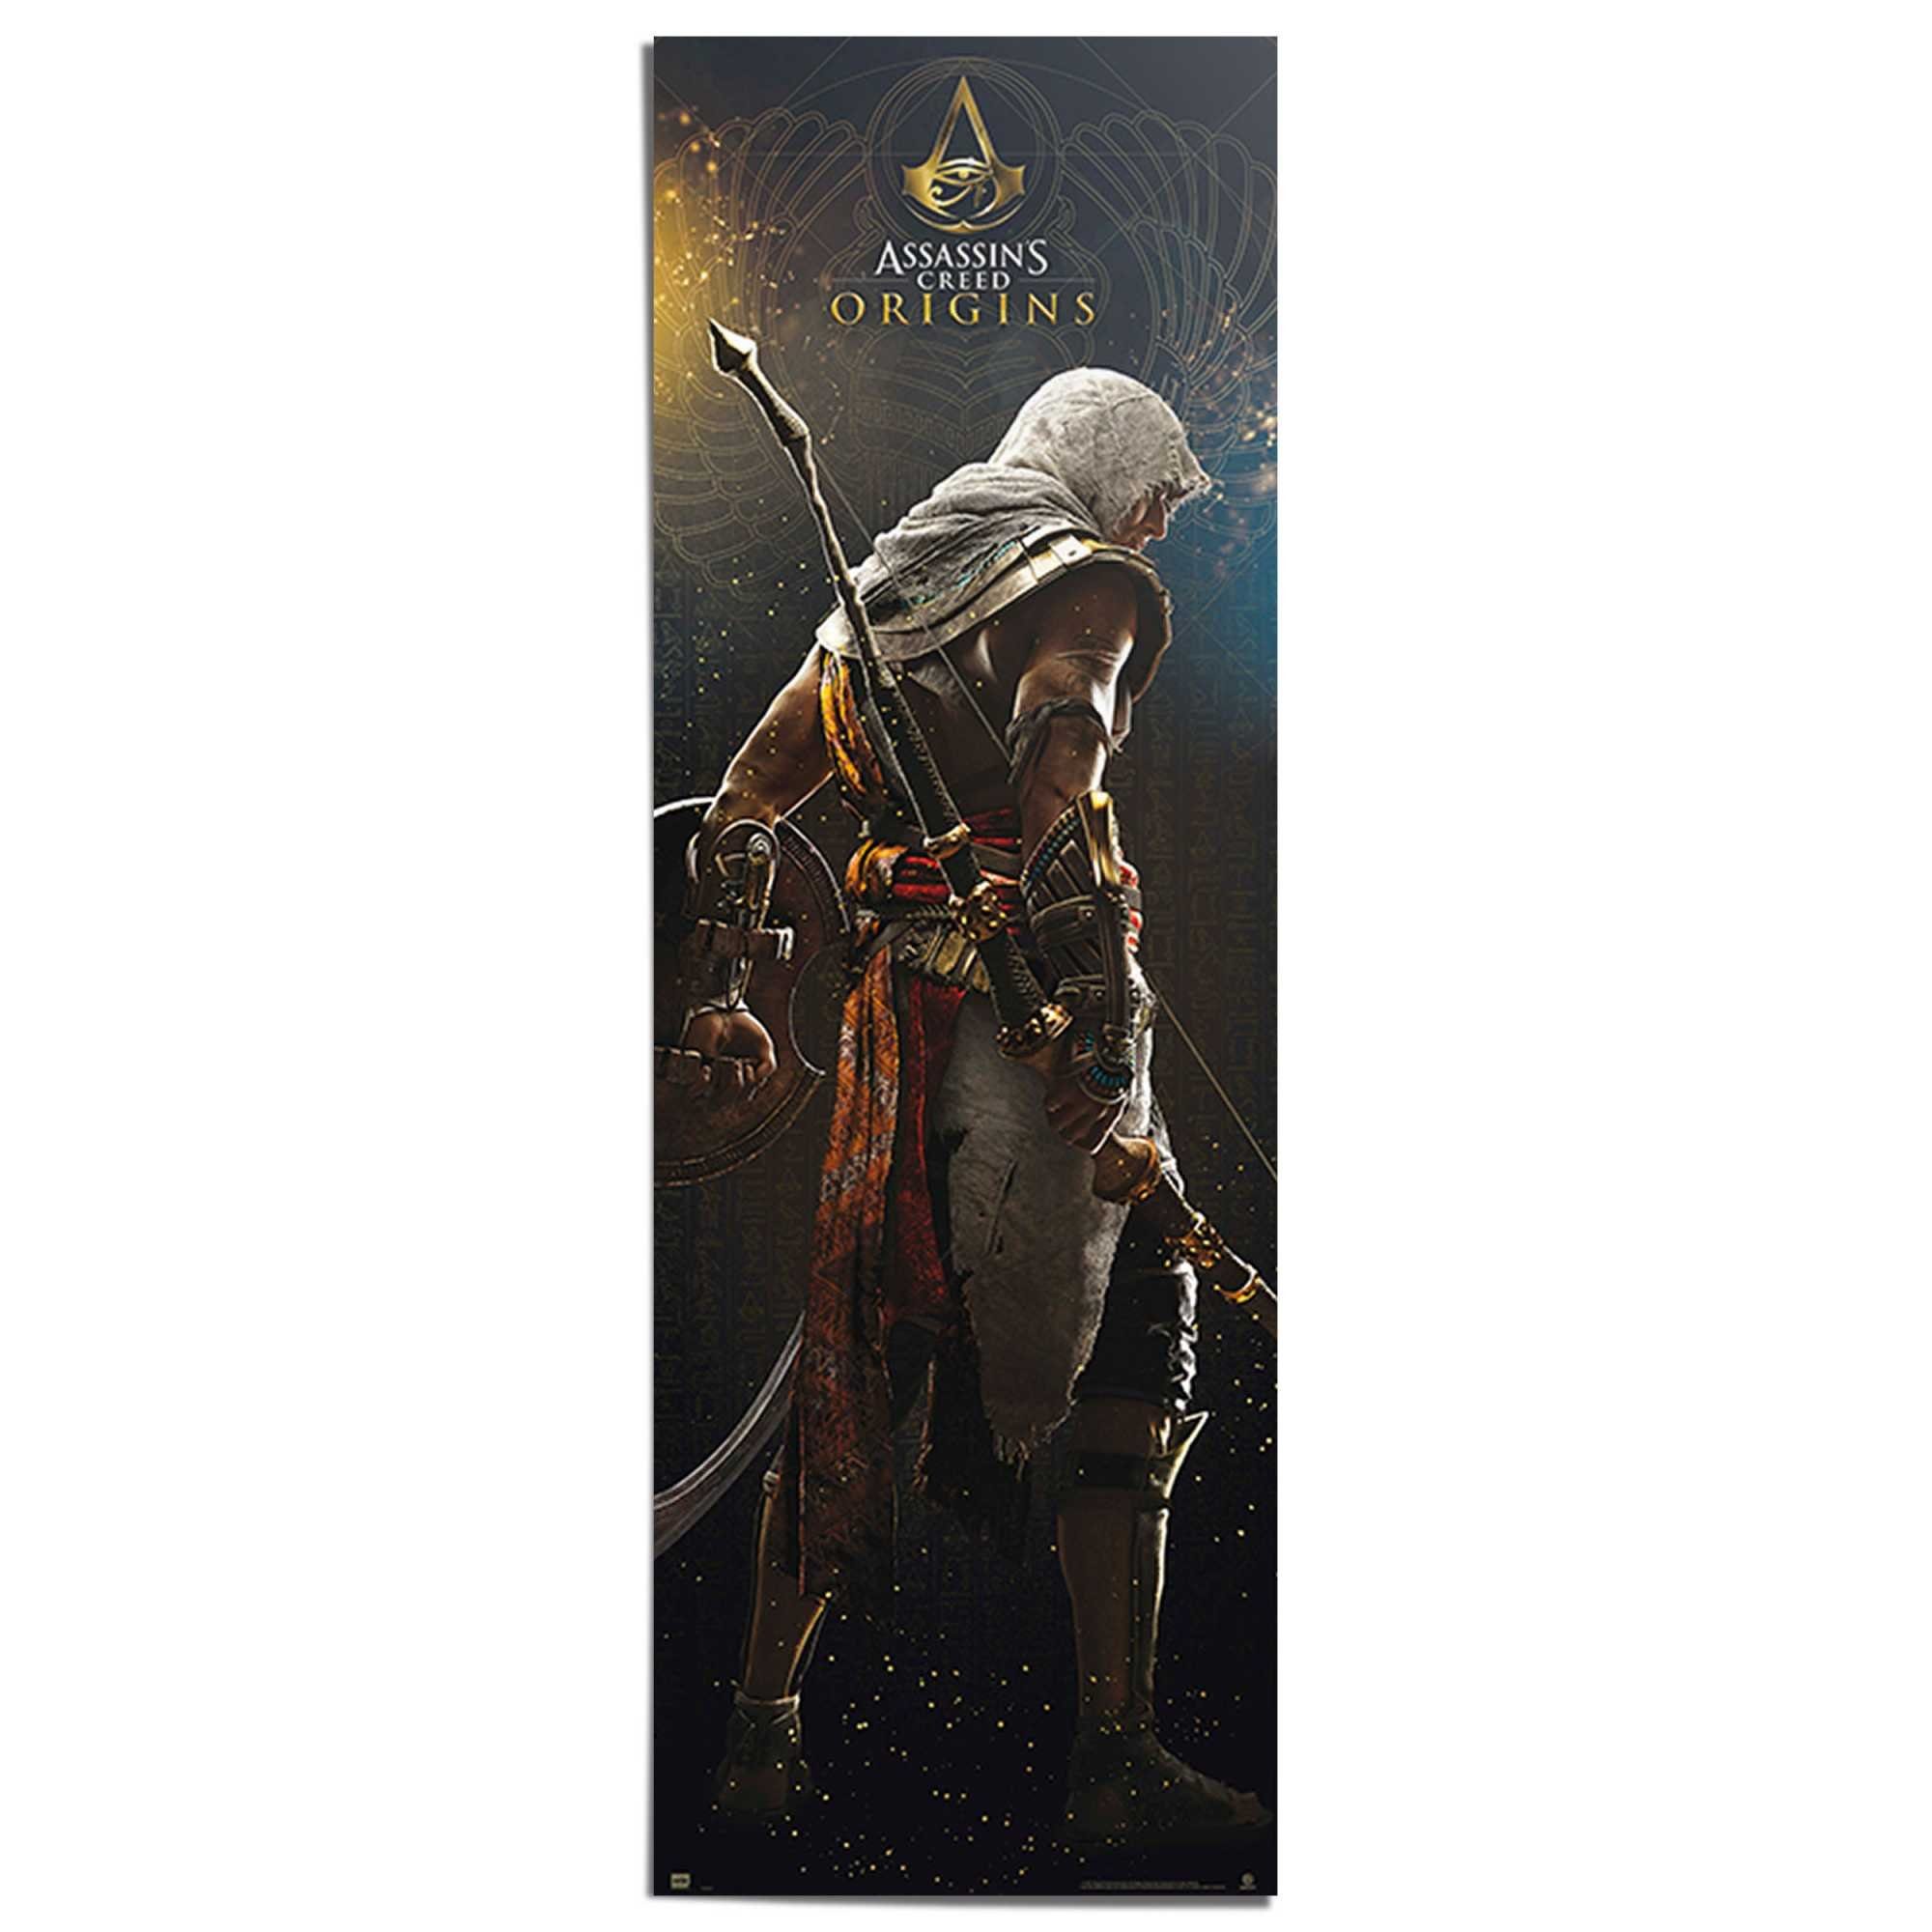 Reinders! Poster Assassins - Creed origins